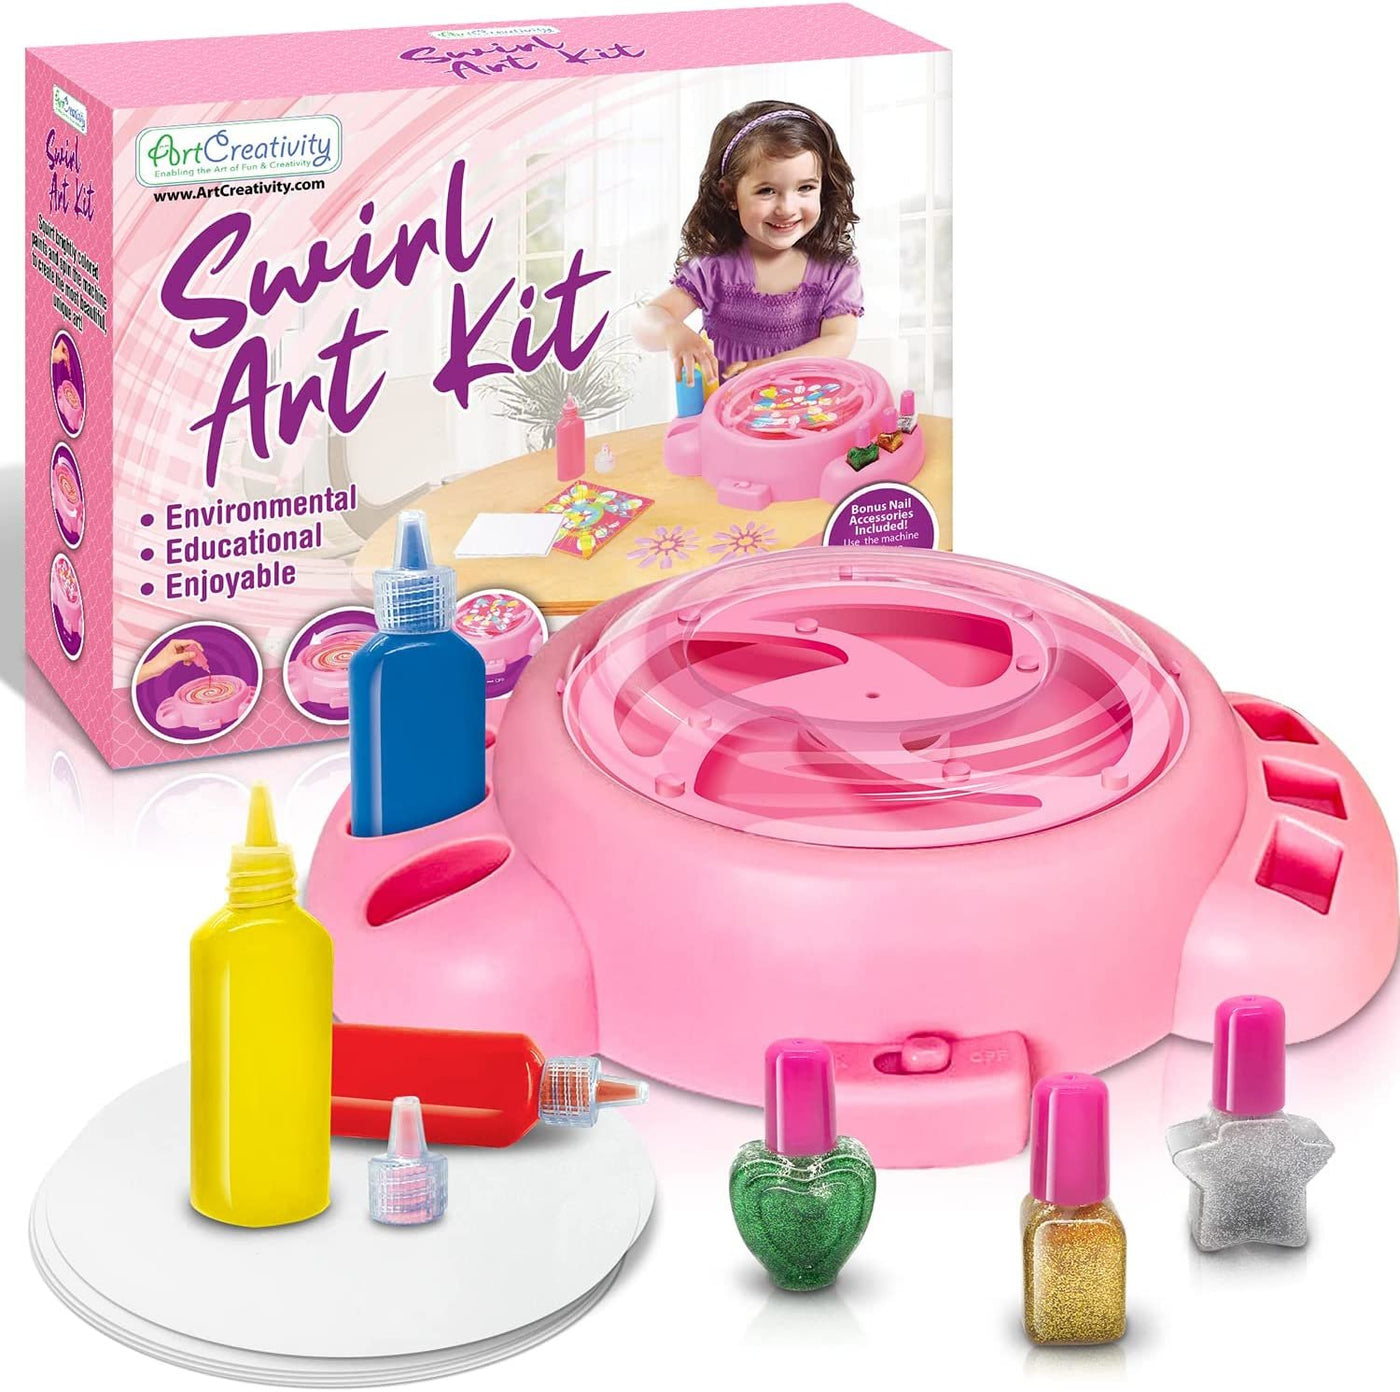 ArtCreativity Mini Art Sets for Kids - Pack of 12-23-Piece Kits